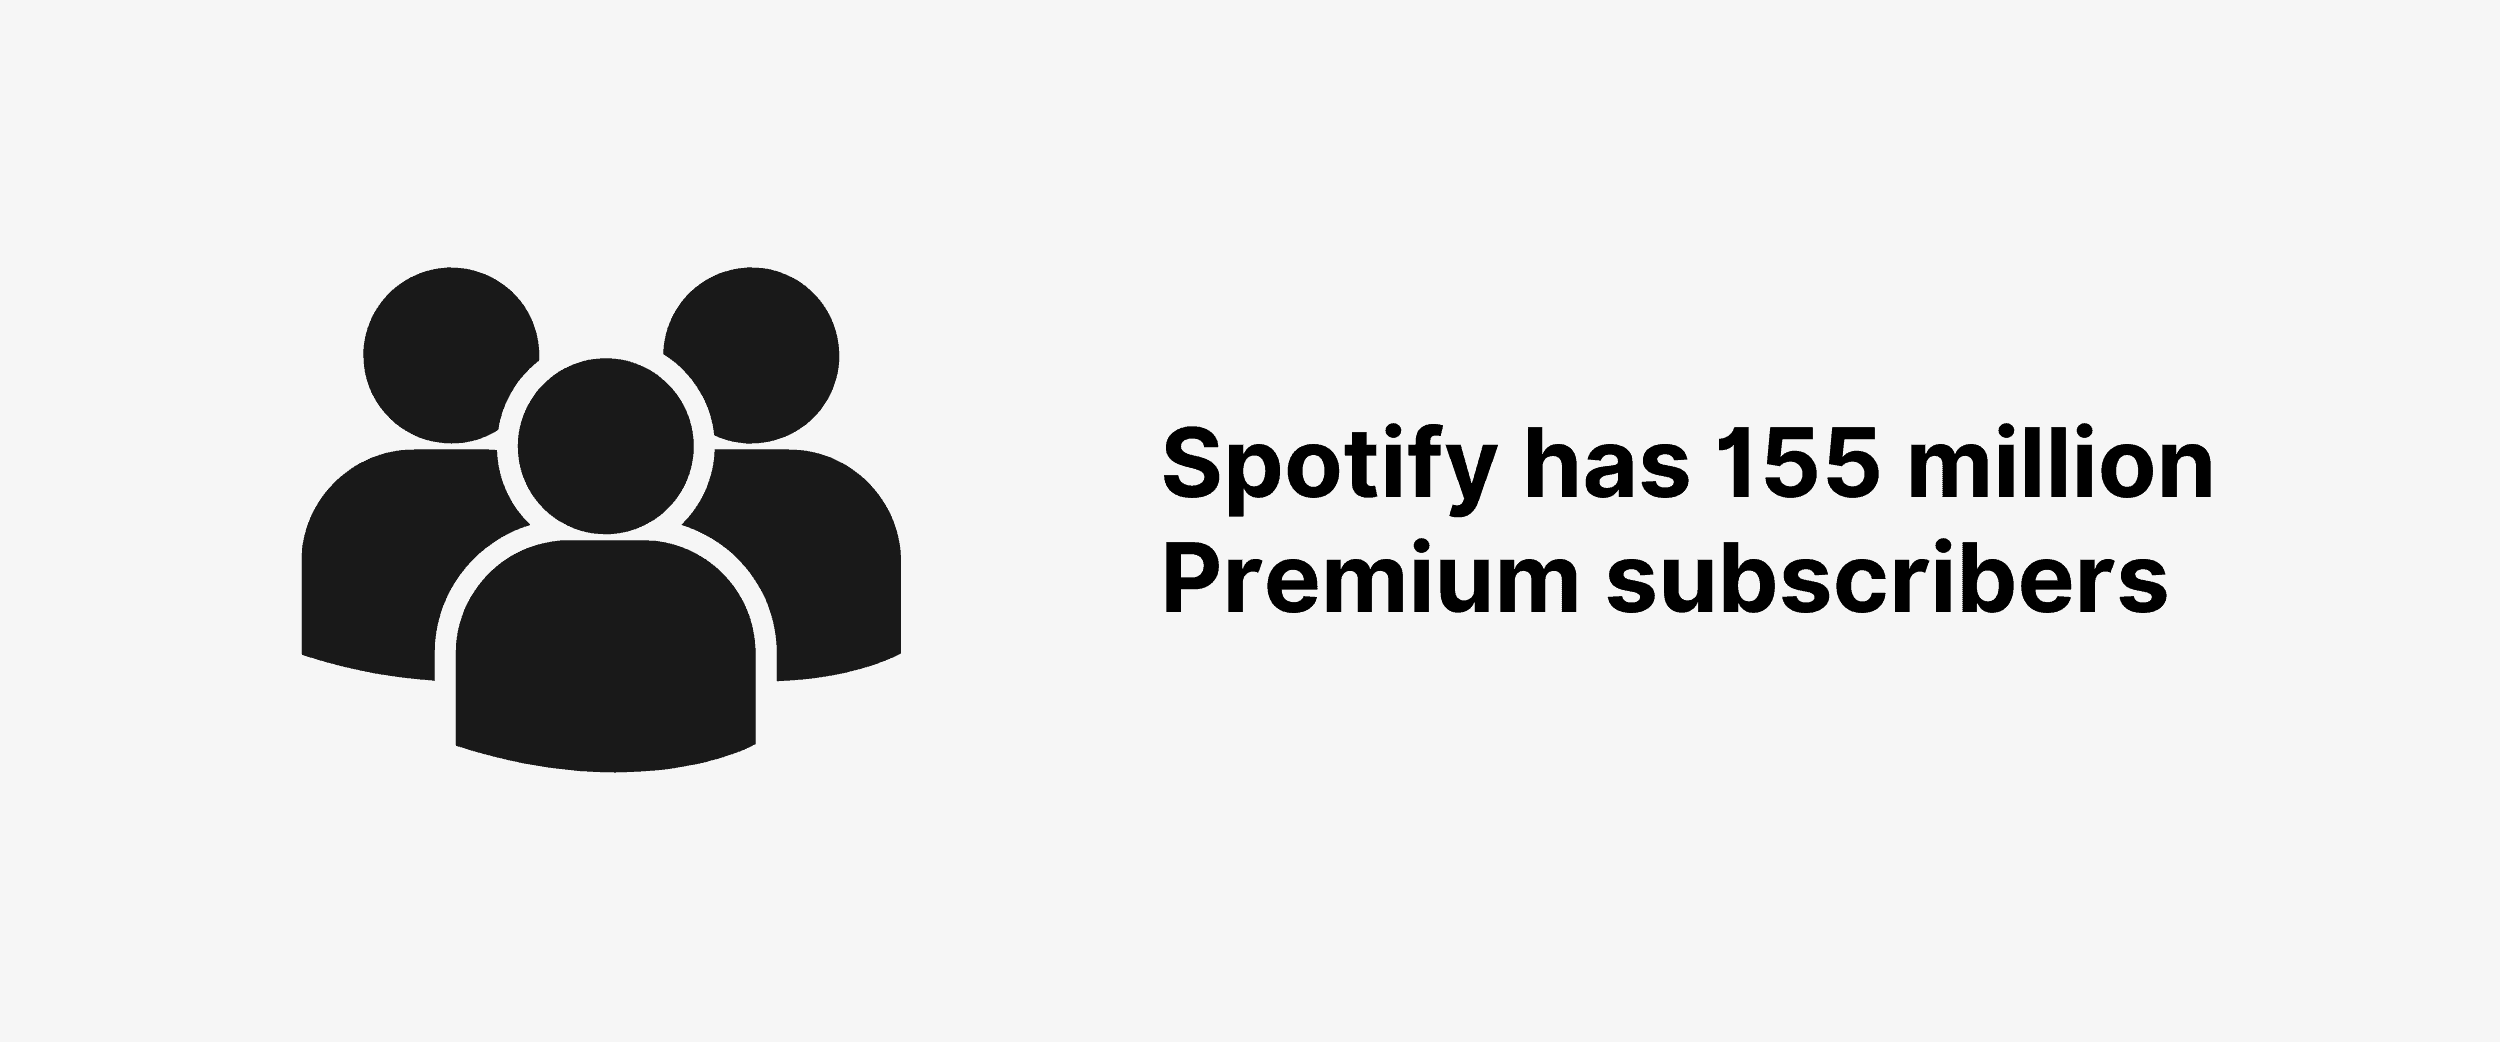 Spotify has 155 million Premium subscribers